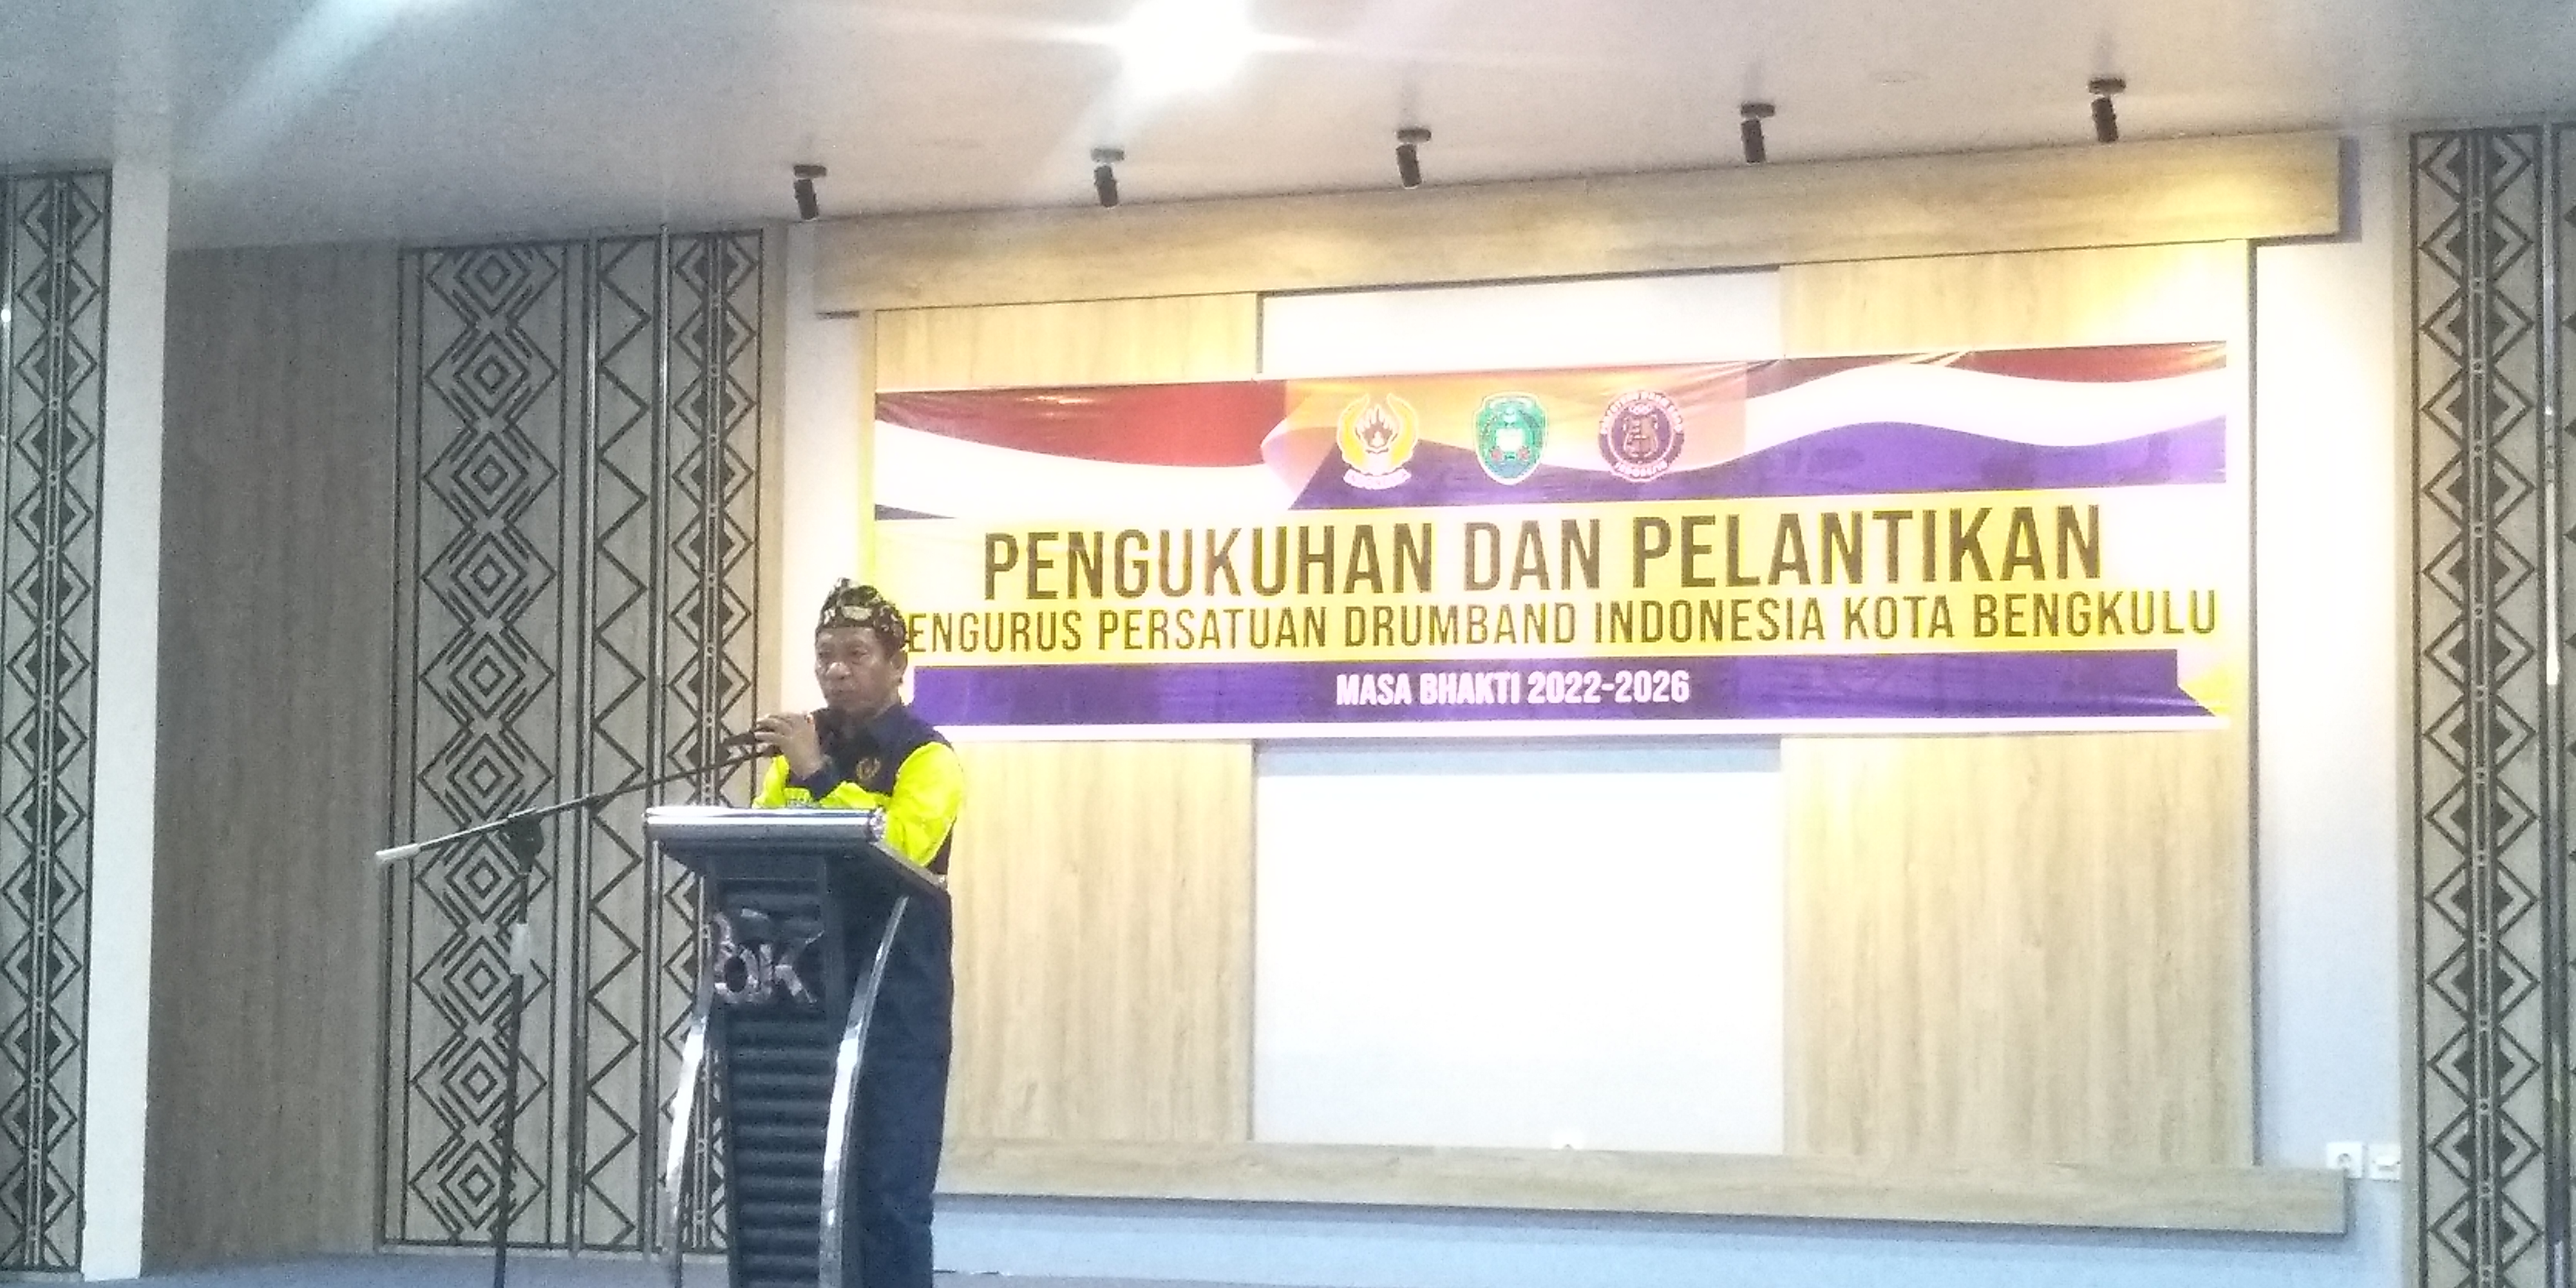 Pengukukuhan dan Pelantikan Pengurus Persatuan Drum Band Indonesia (PDBI) Kota Bengkulu Masa Bhakti 2022 - 2026